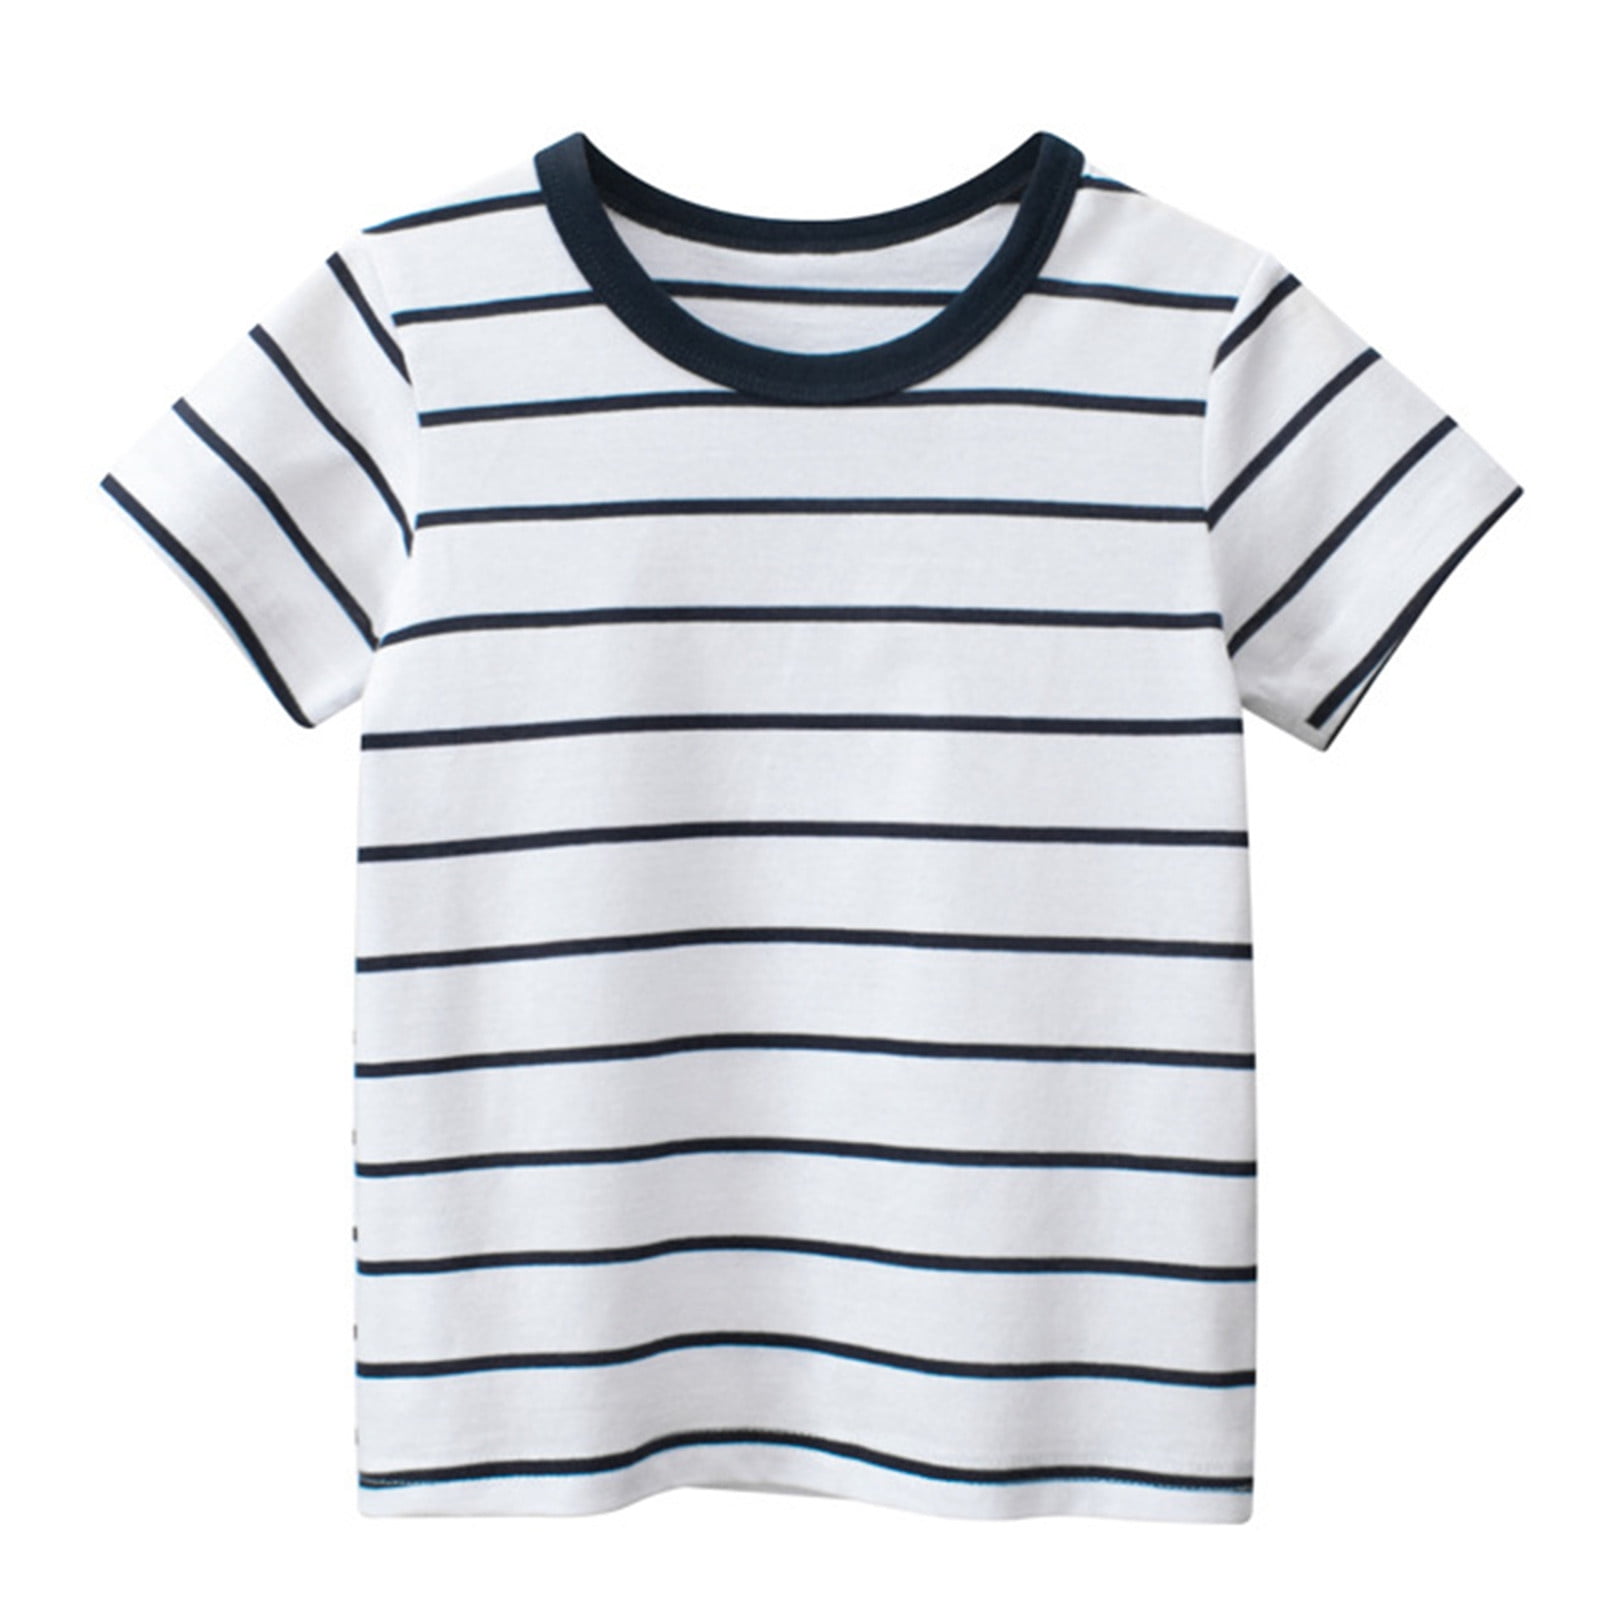 Little Boys Shirts & Tops Toddler Kids Baby Boys Girls Stripes Short ...